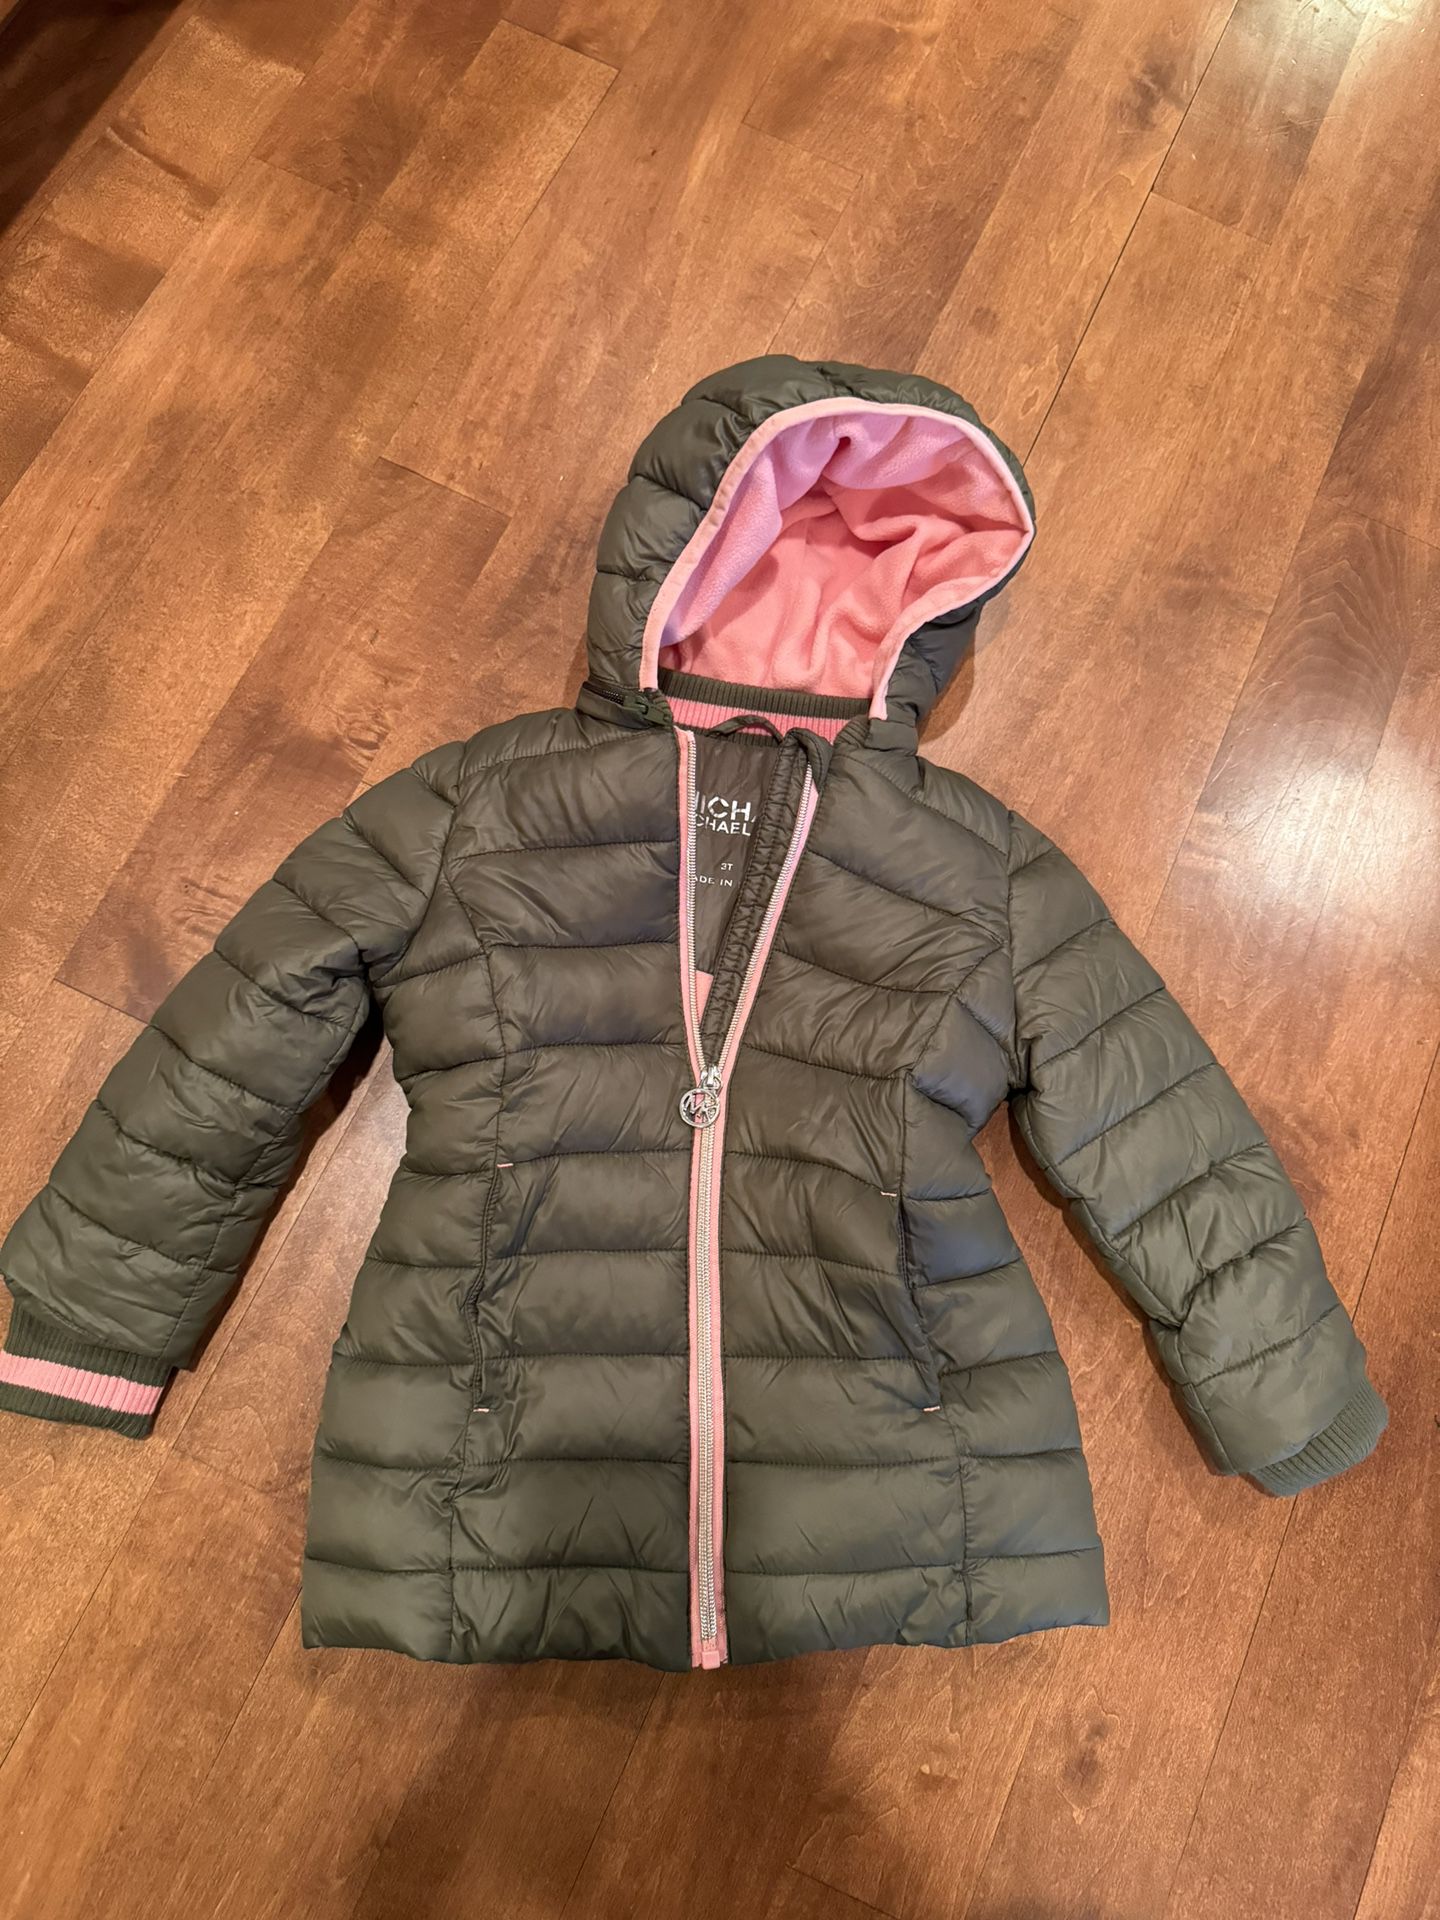 Toddler Girl Michael Kors Coat Shipping Available 